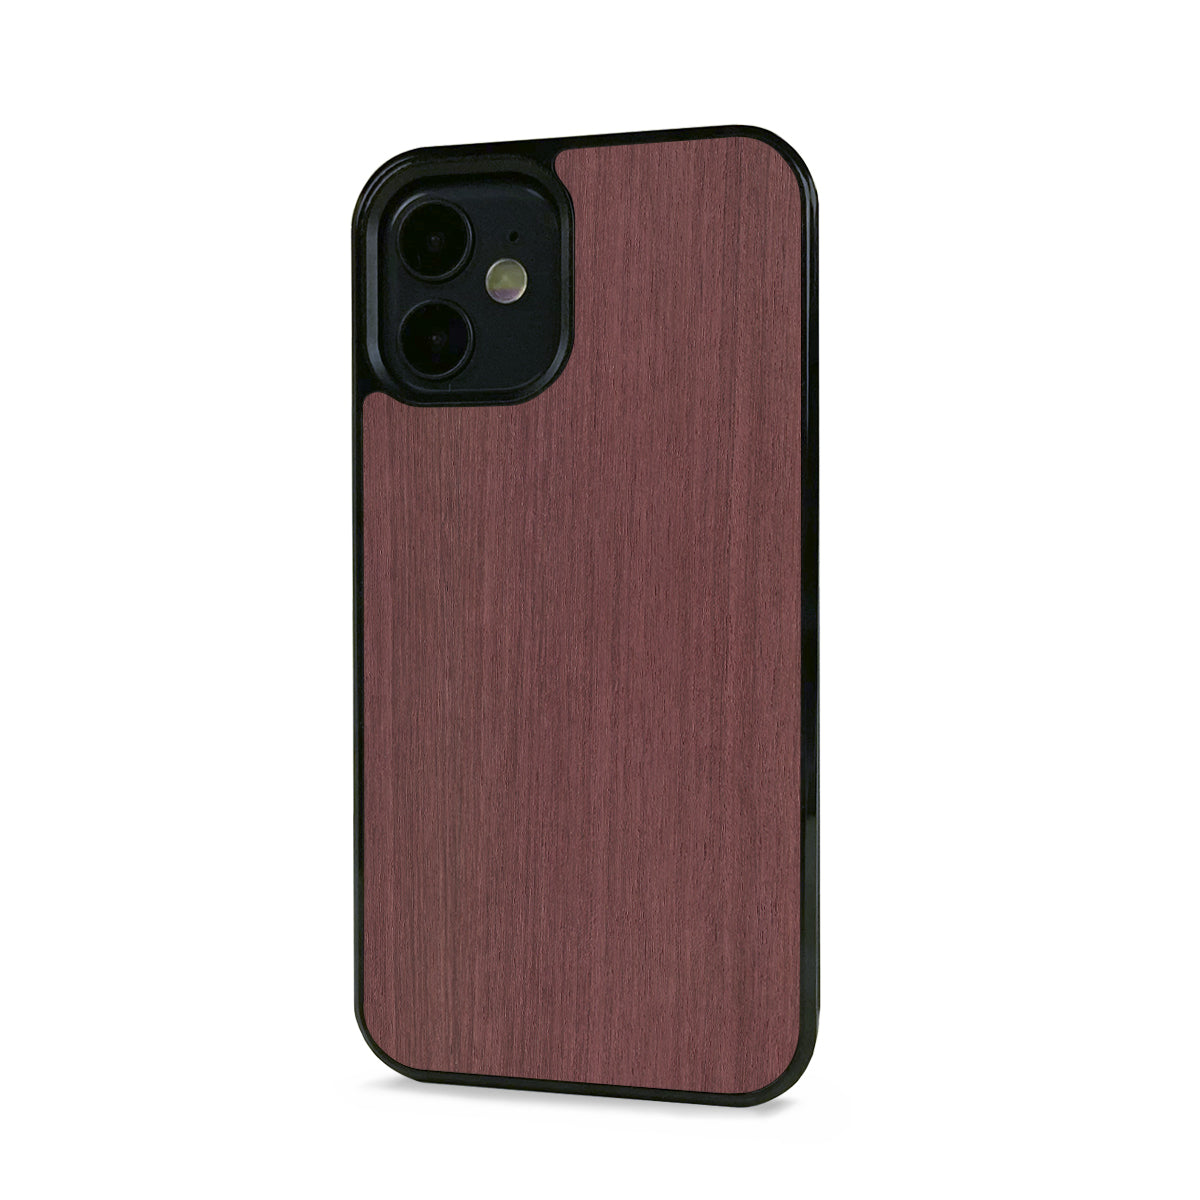 iPhone 12 —  #WoodBack Explorer Black Case